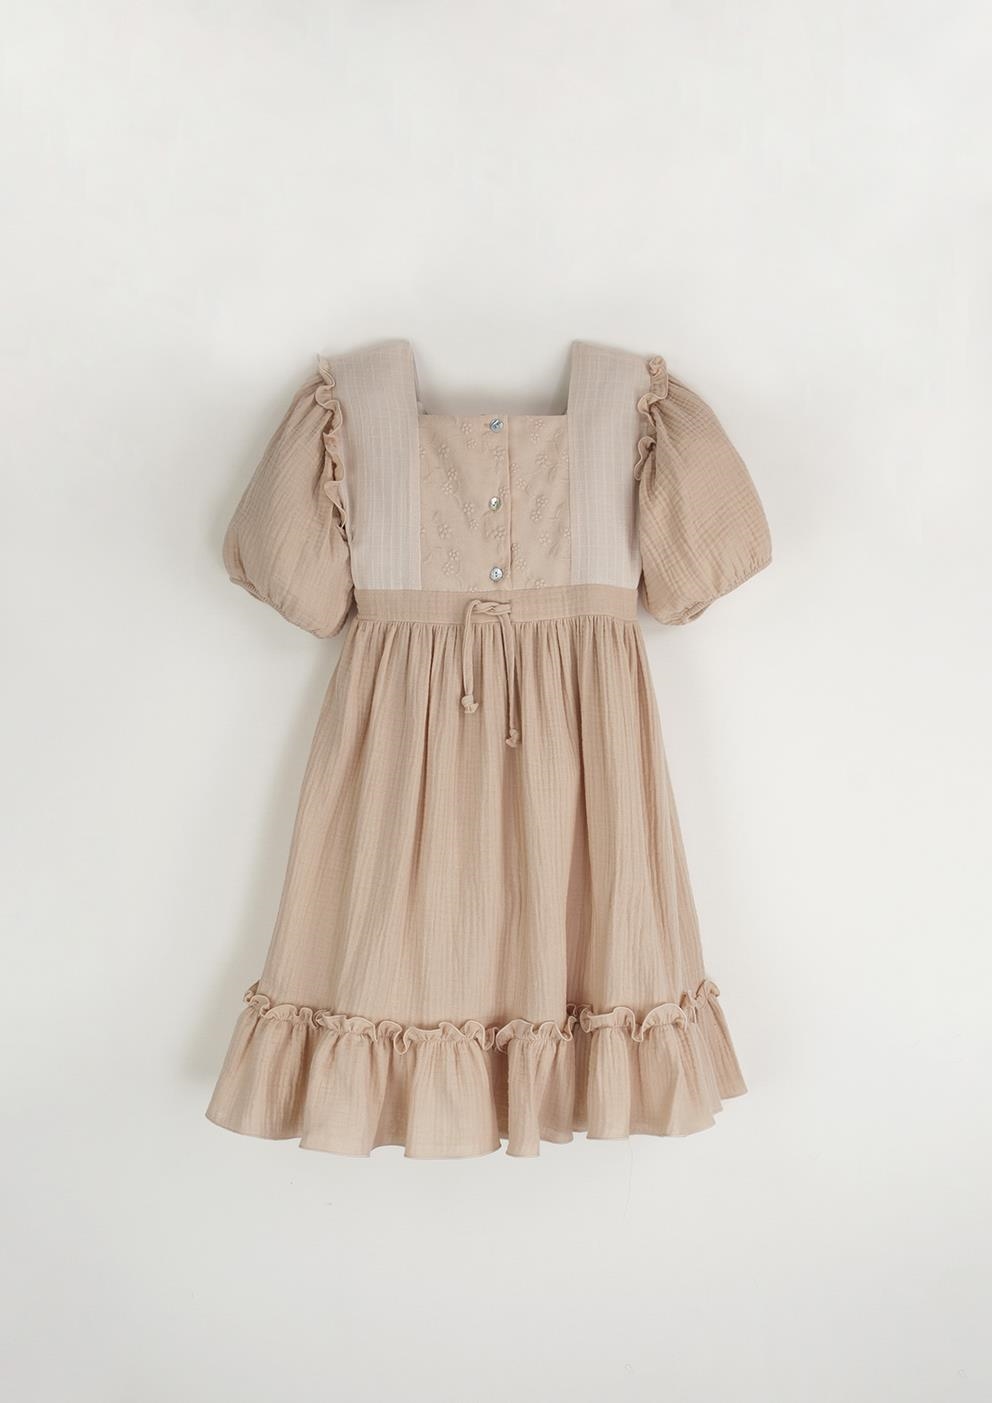 Mod.33.3 Pink dress with puffed sleeve | SS23 Mod.33.3 Pink dress with puffed sleeve